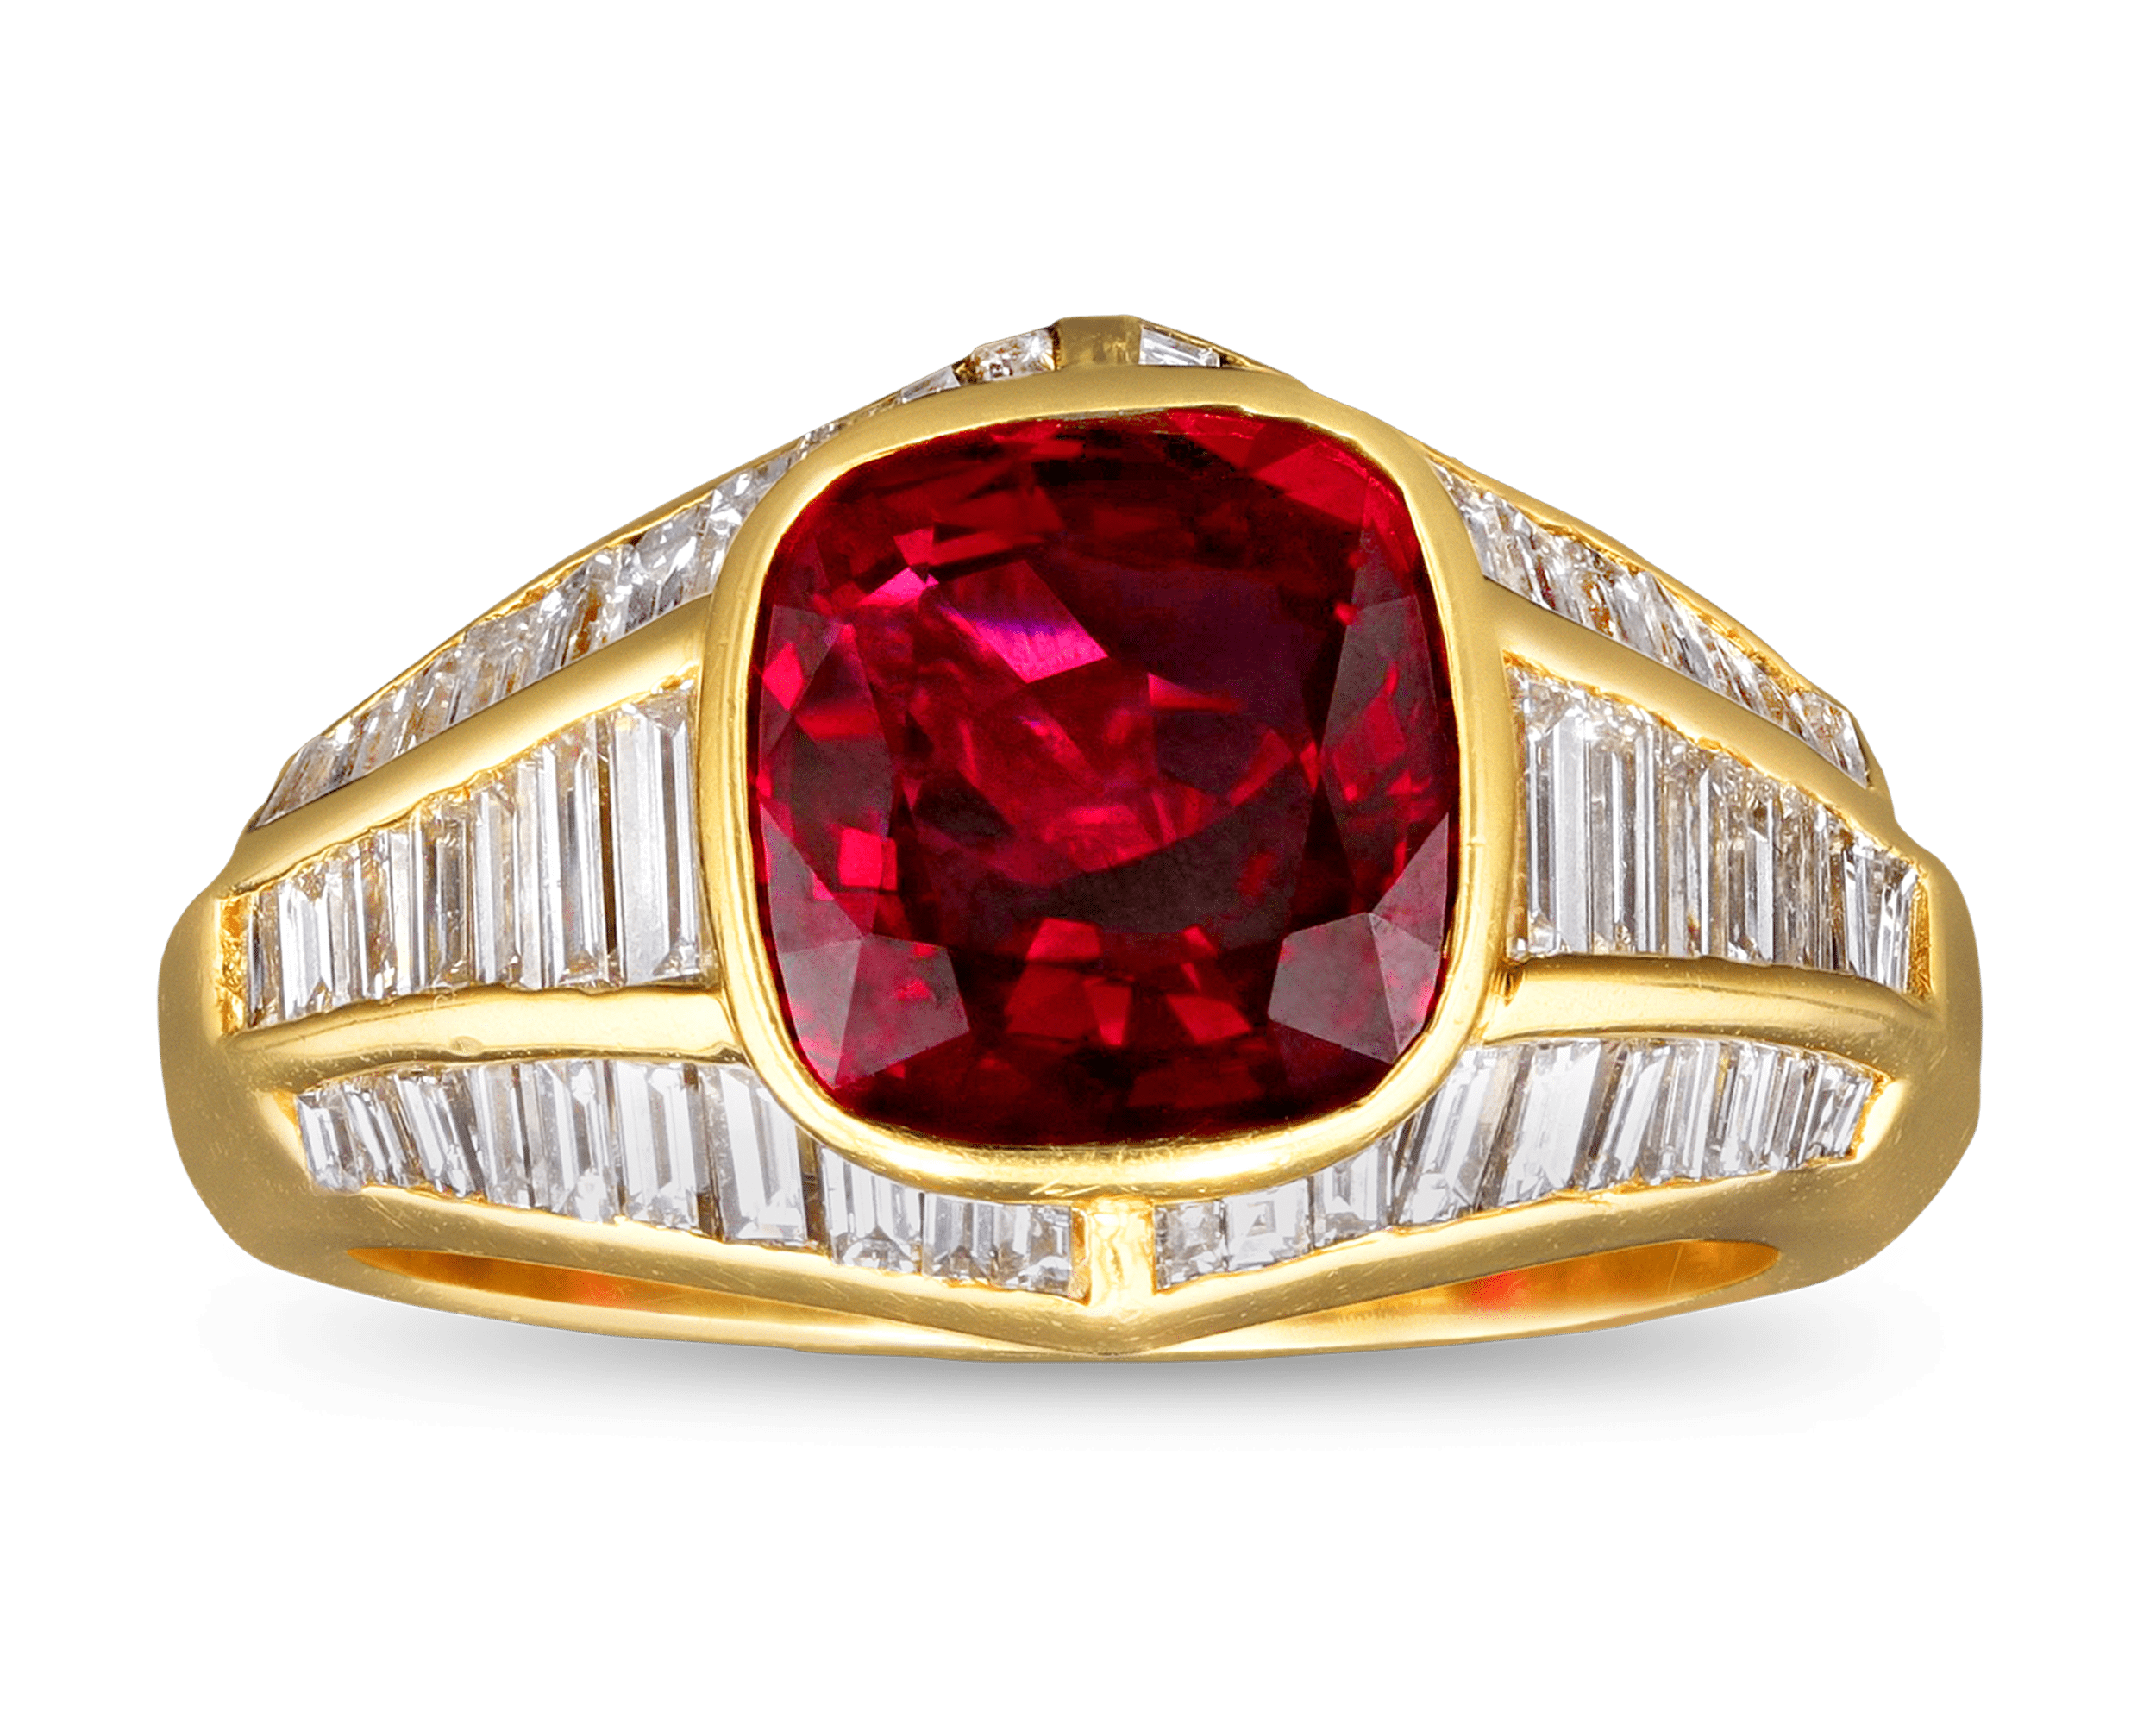 Thai Ruby and Diamond Ring